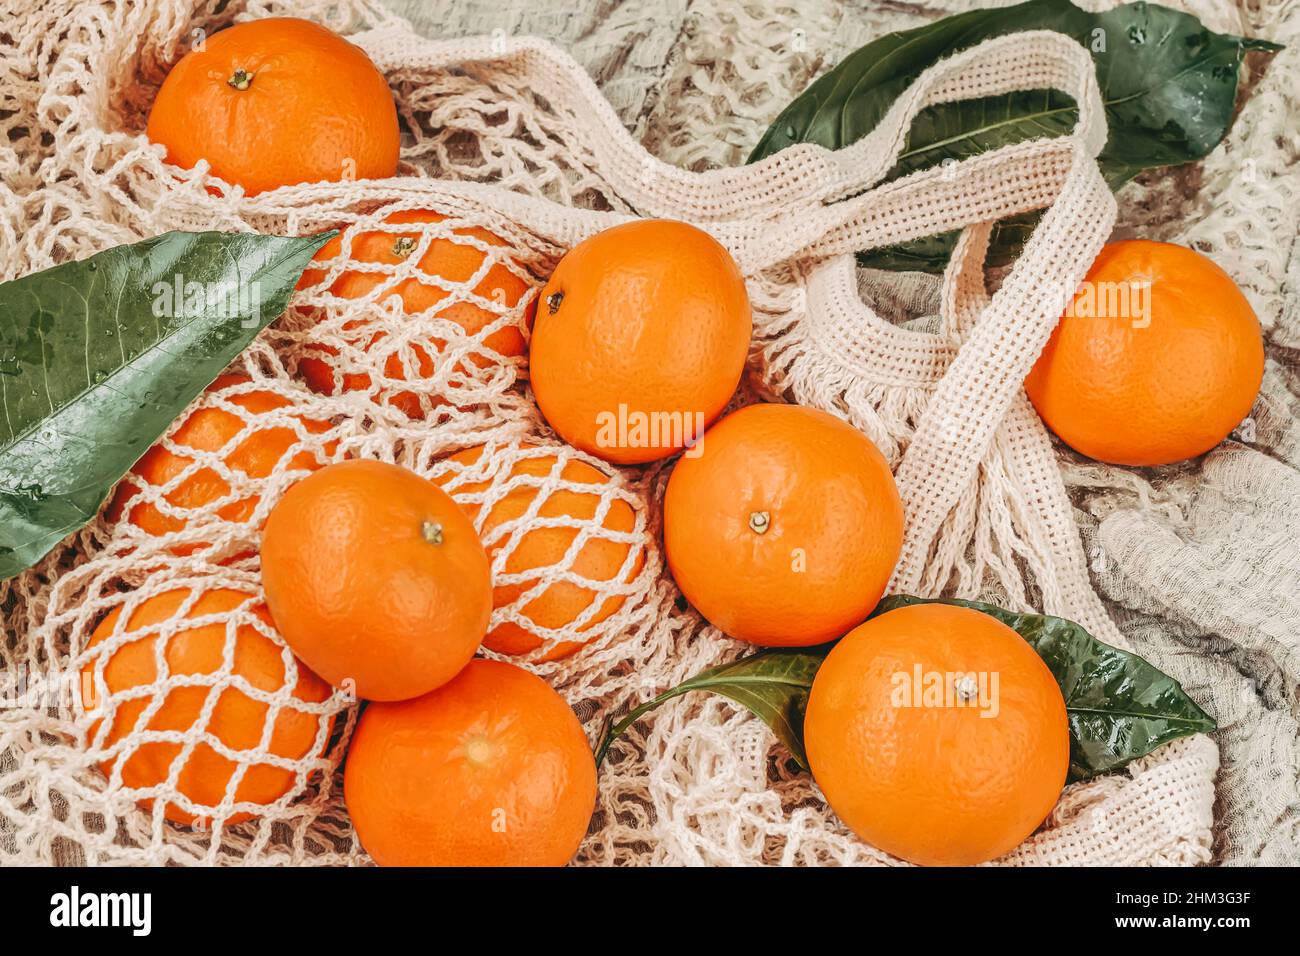 https://c8.alamy.com/comp/2HM3G3F/fresh-citrus-fruits-tangerines-oranges-close-up-on-cotton-mesh-bag-rustic-style-2HM3G3F.jpg